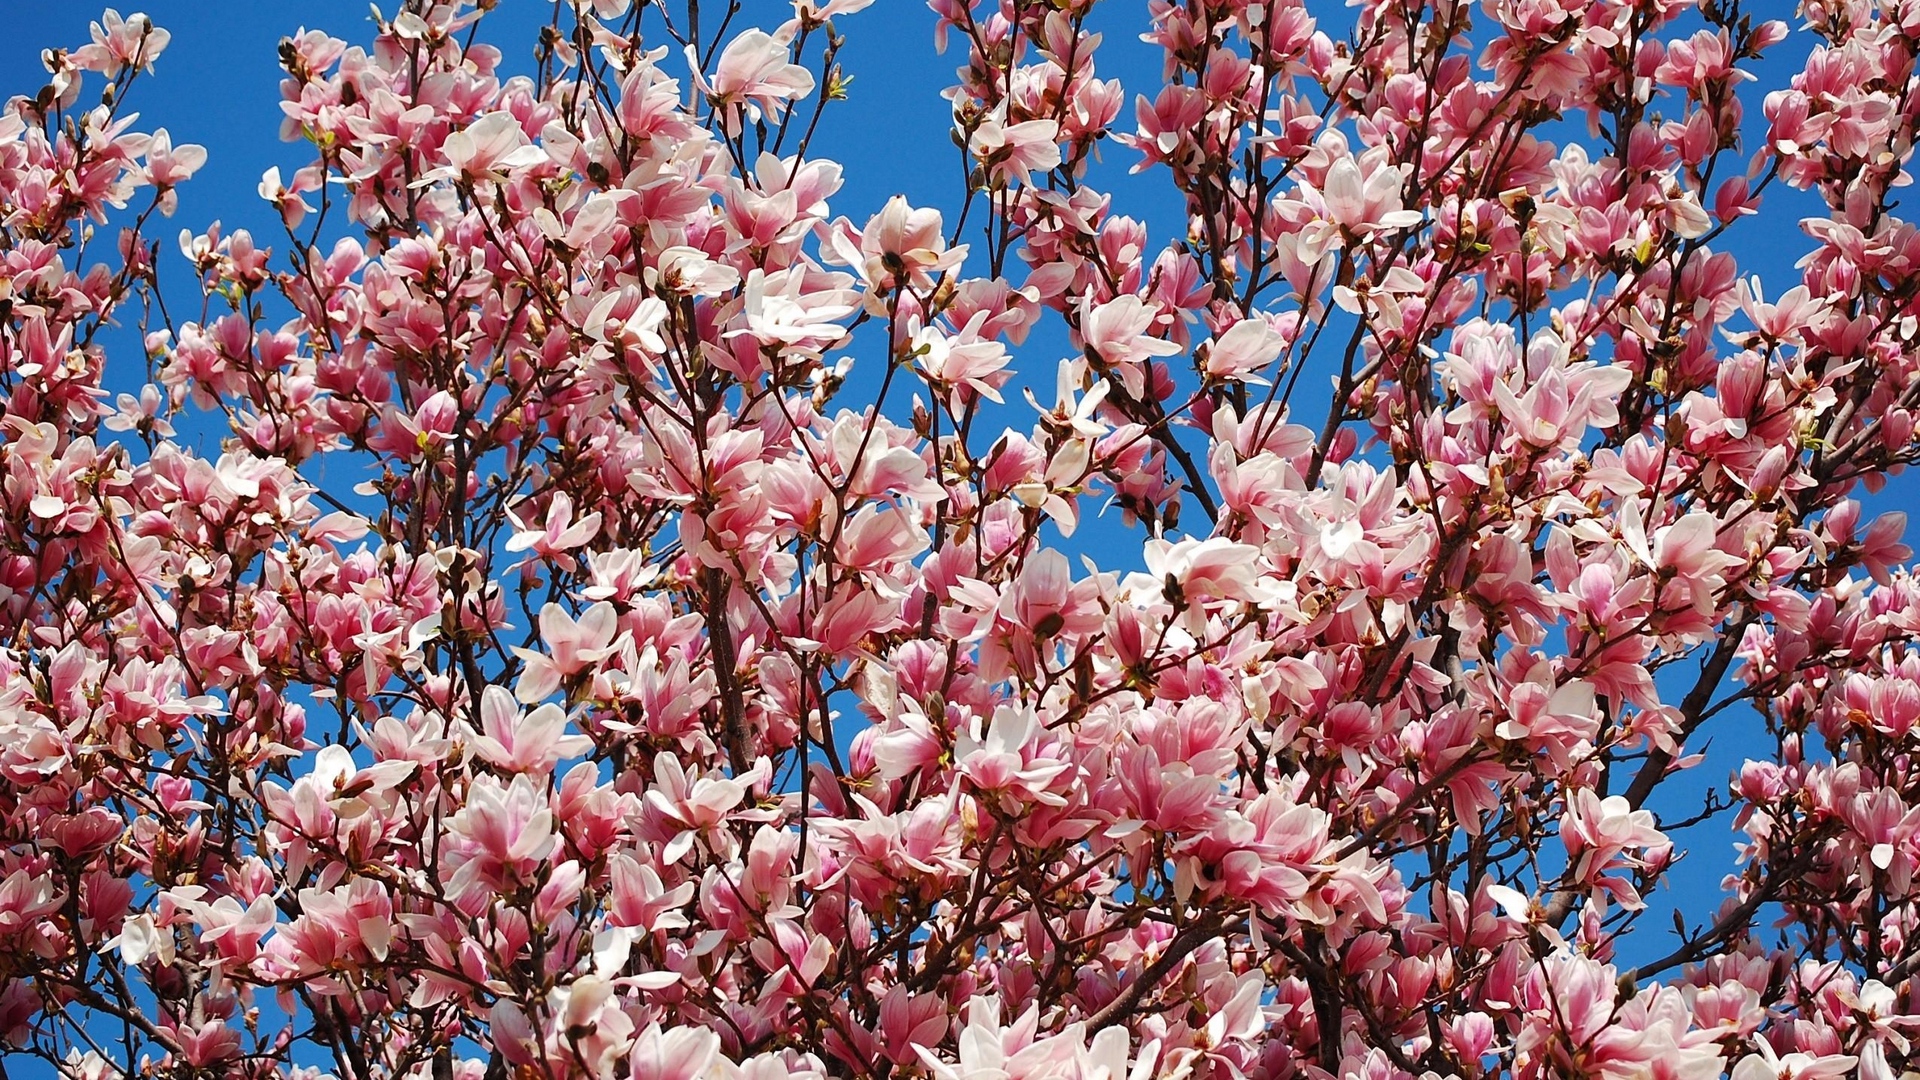 Download wallpaper 1920x1080 magnolia, bloom, sky, branch